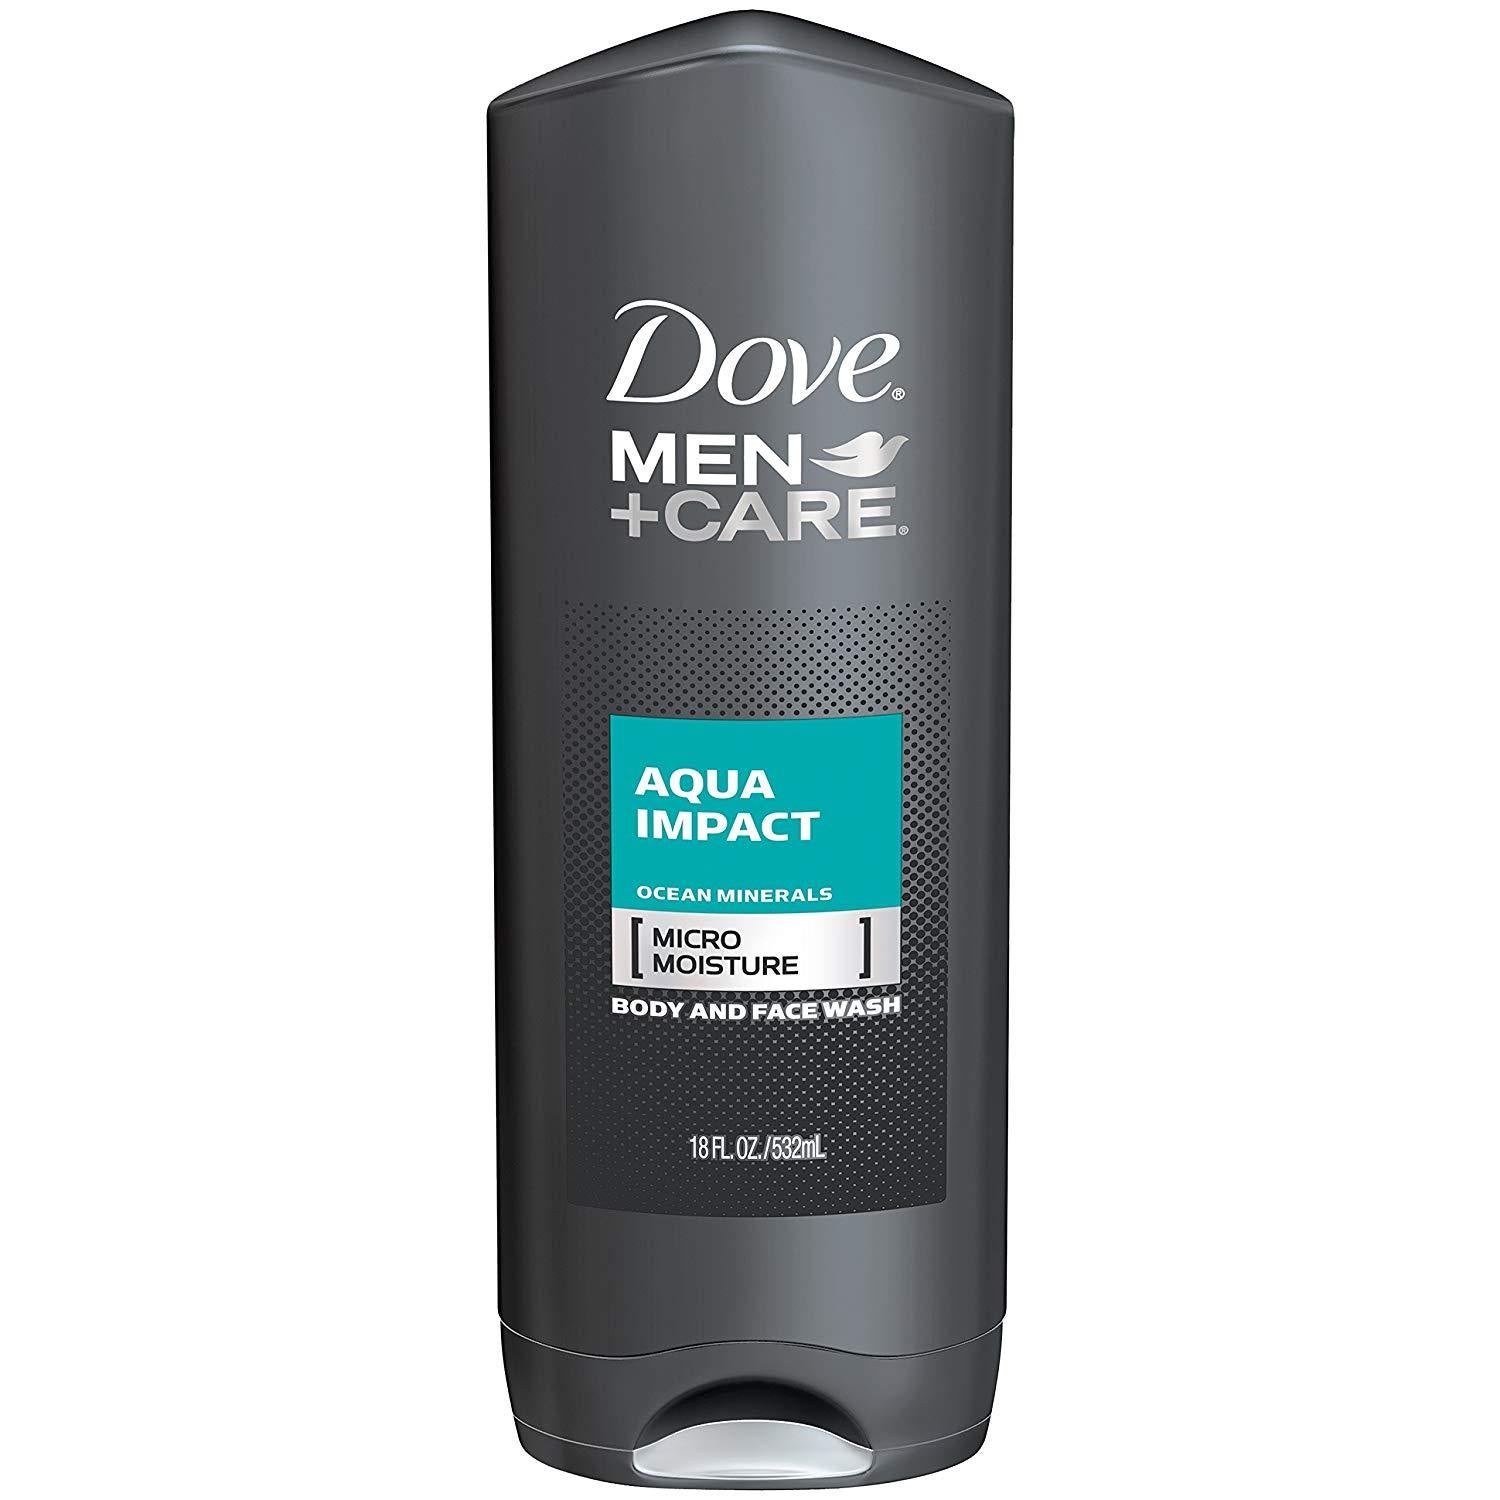 bvi>Dove Men+Care Body and Face Wash